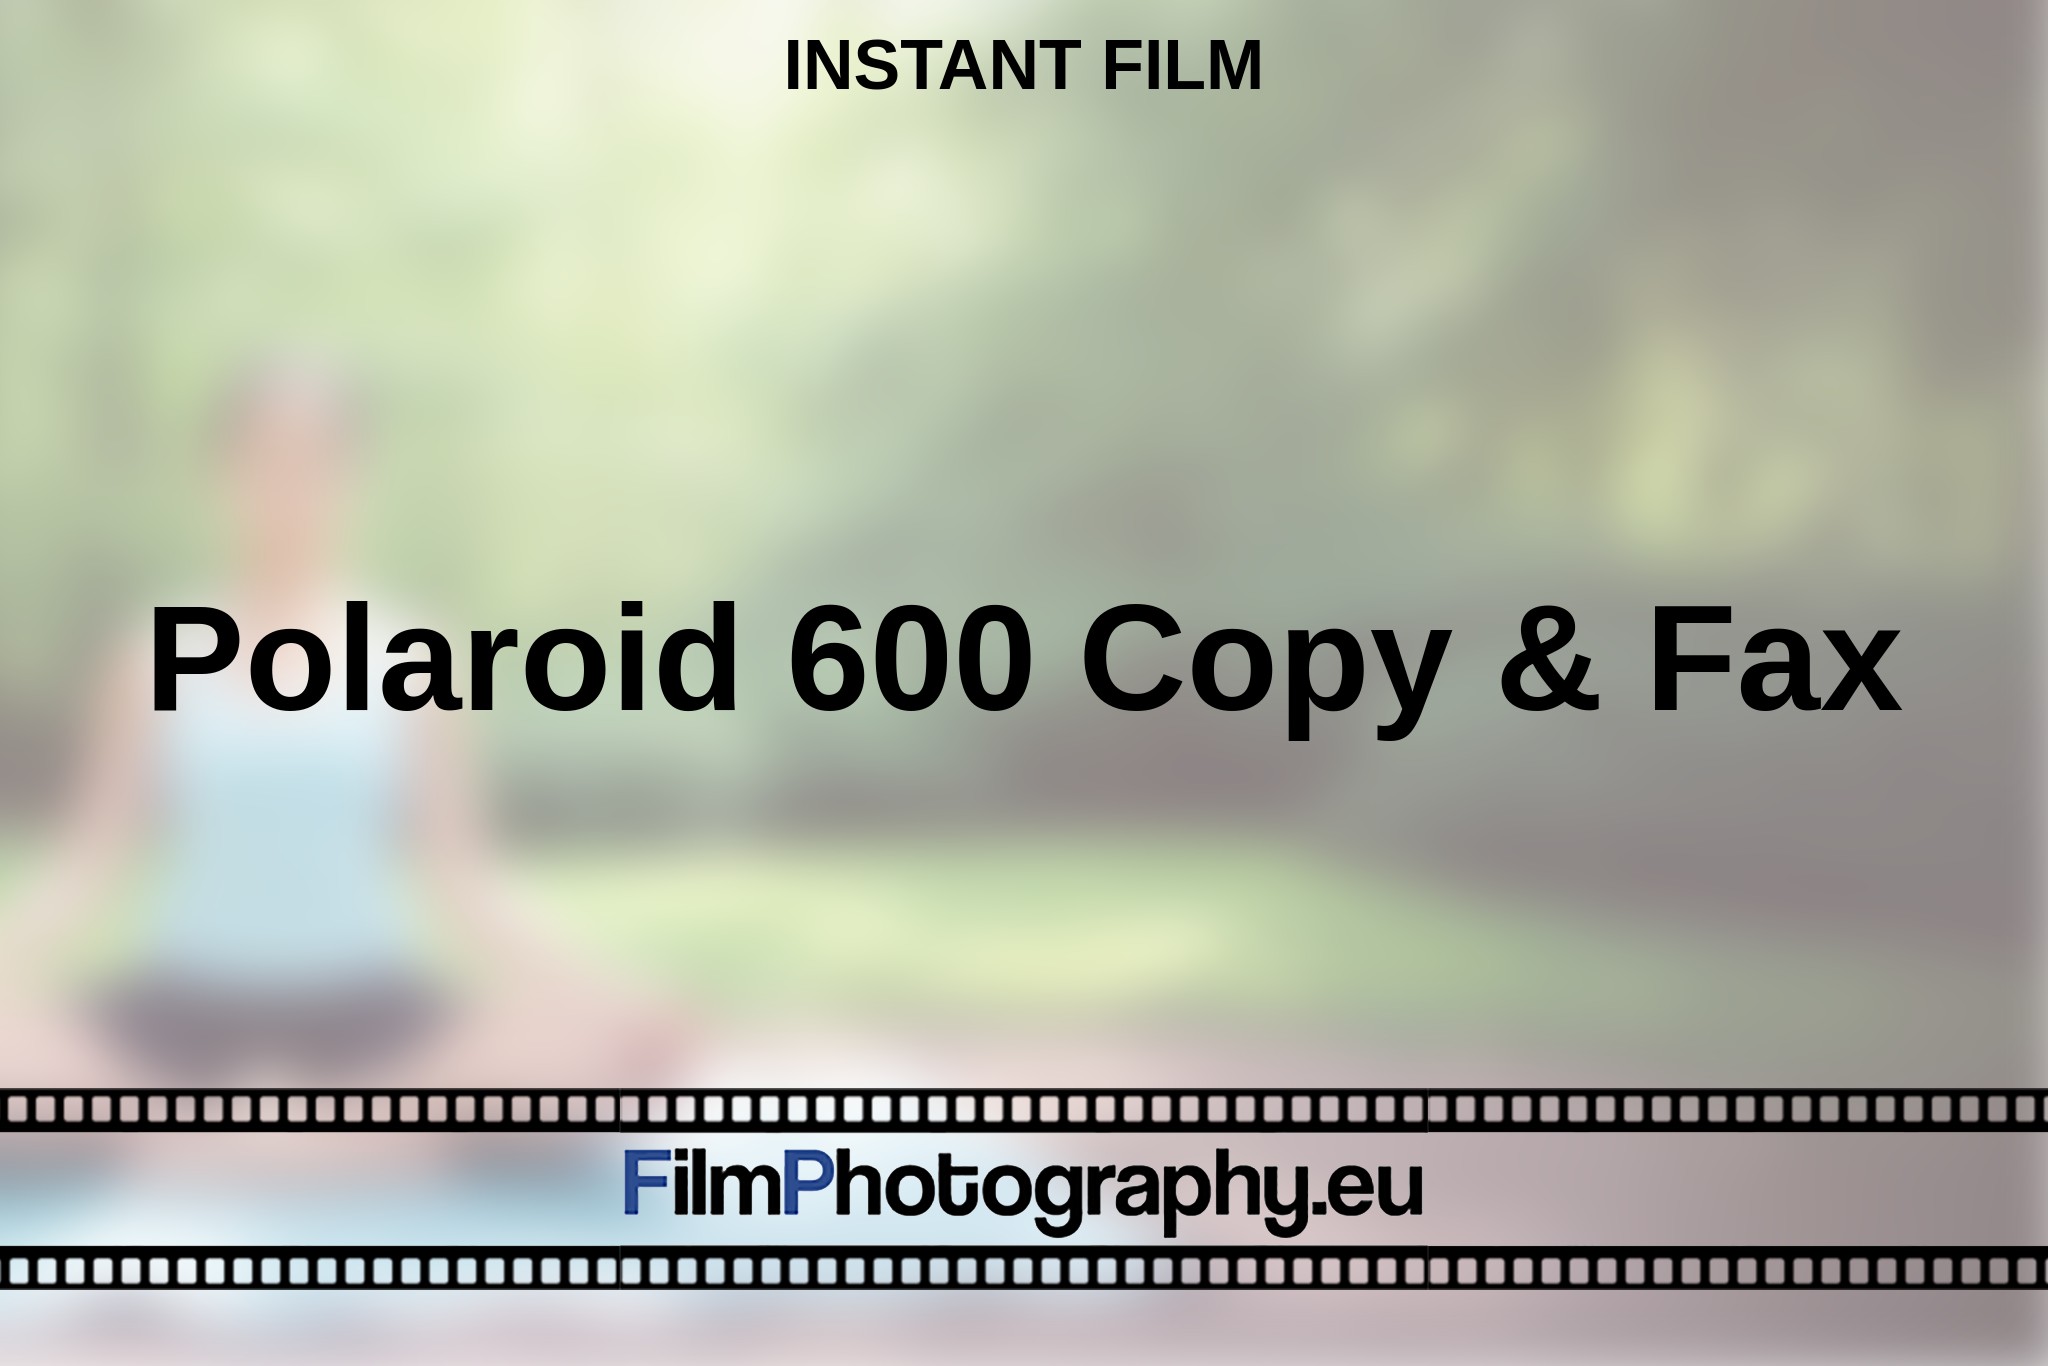 polaroid-600-copy-fax-instant-film-bnv.jpg